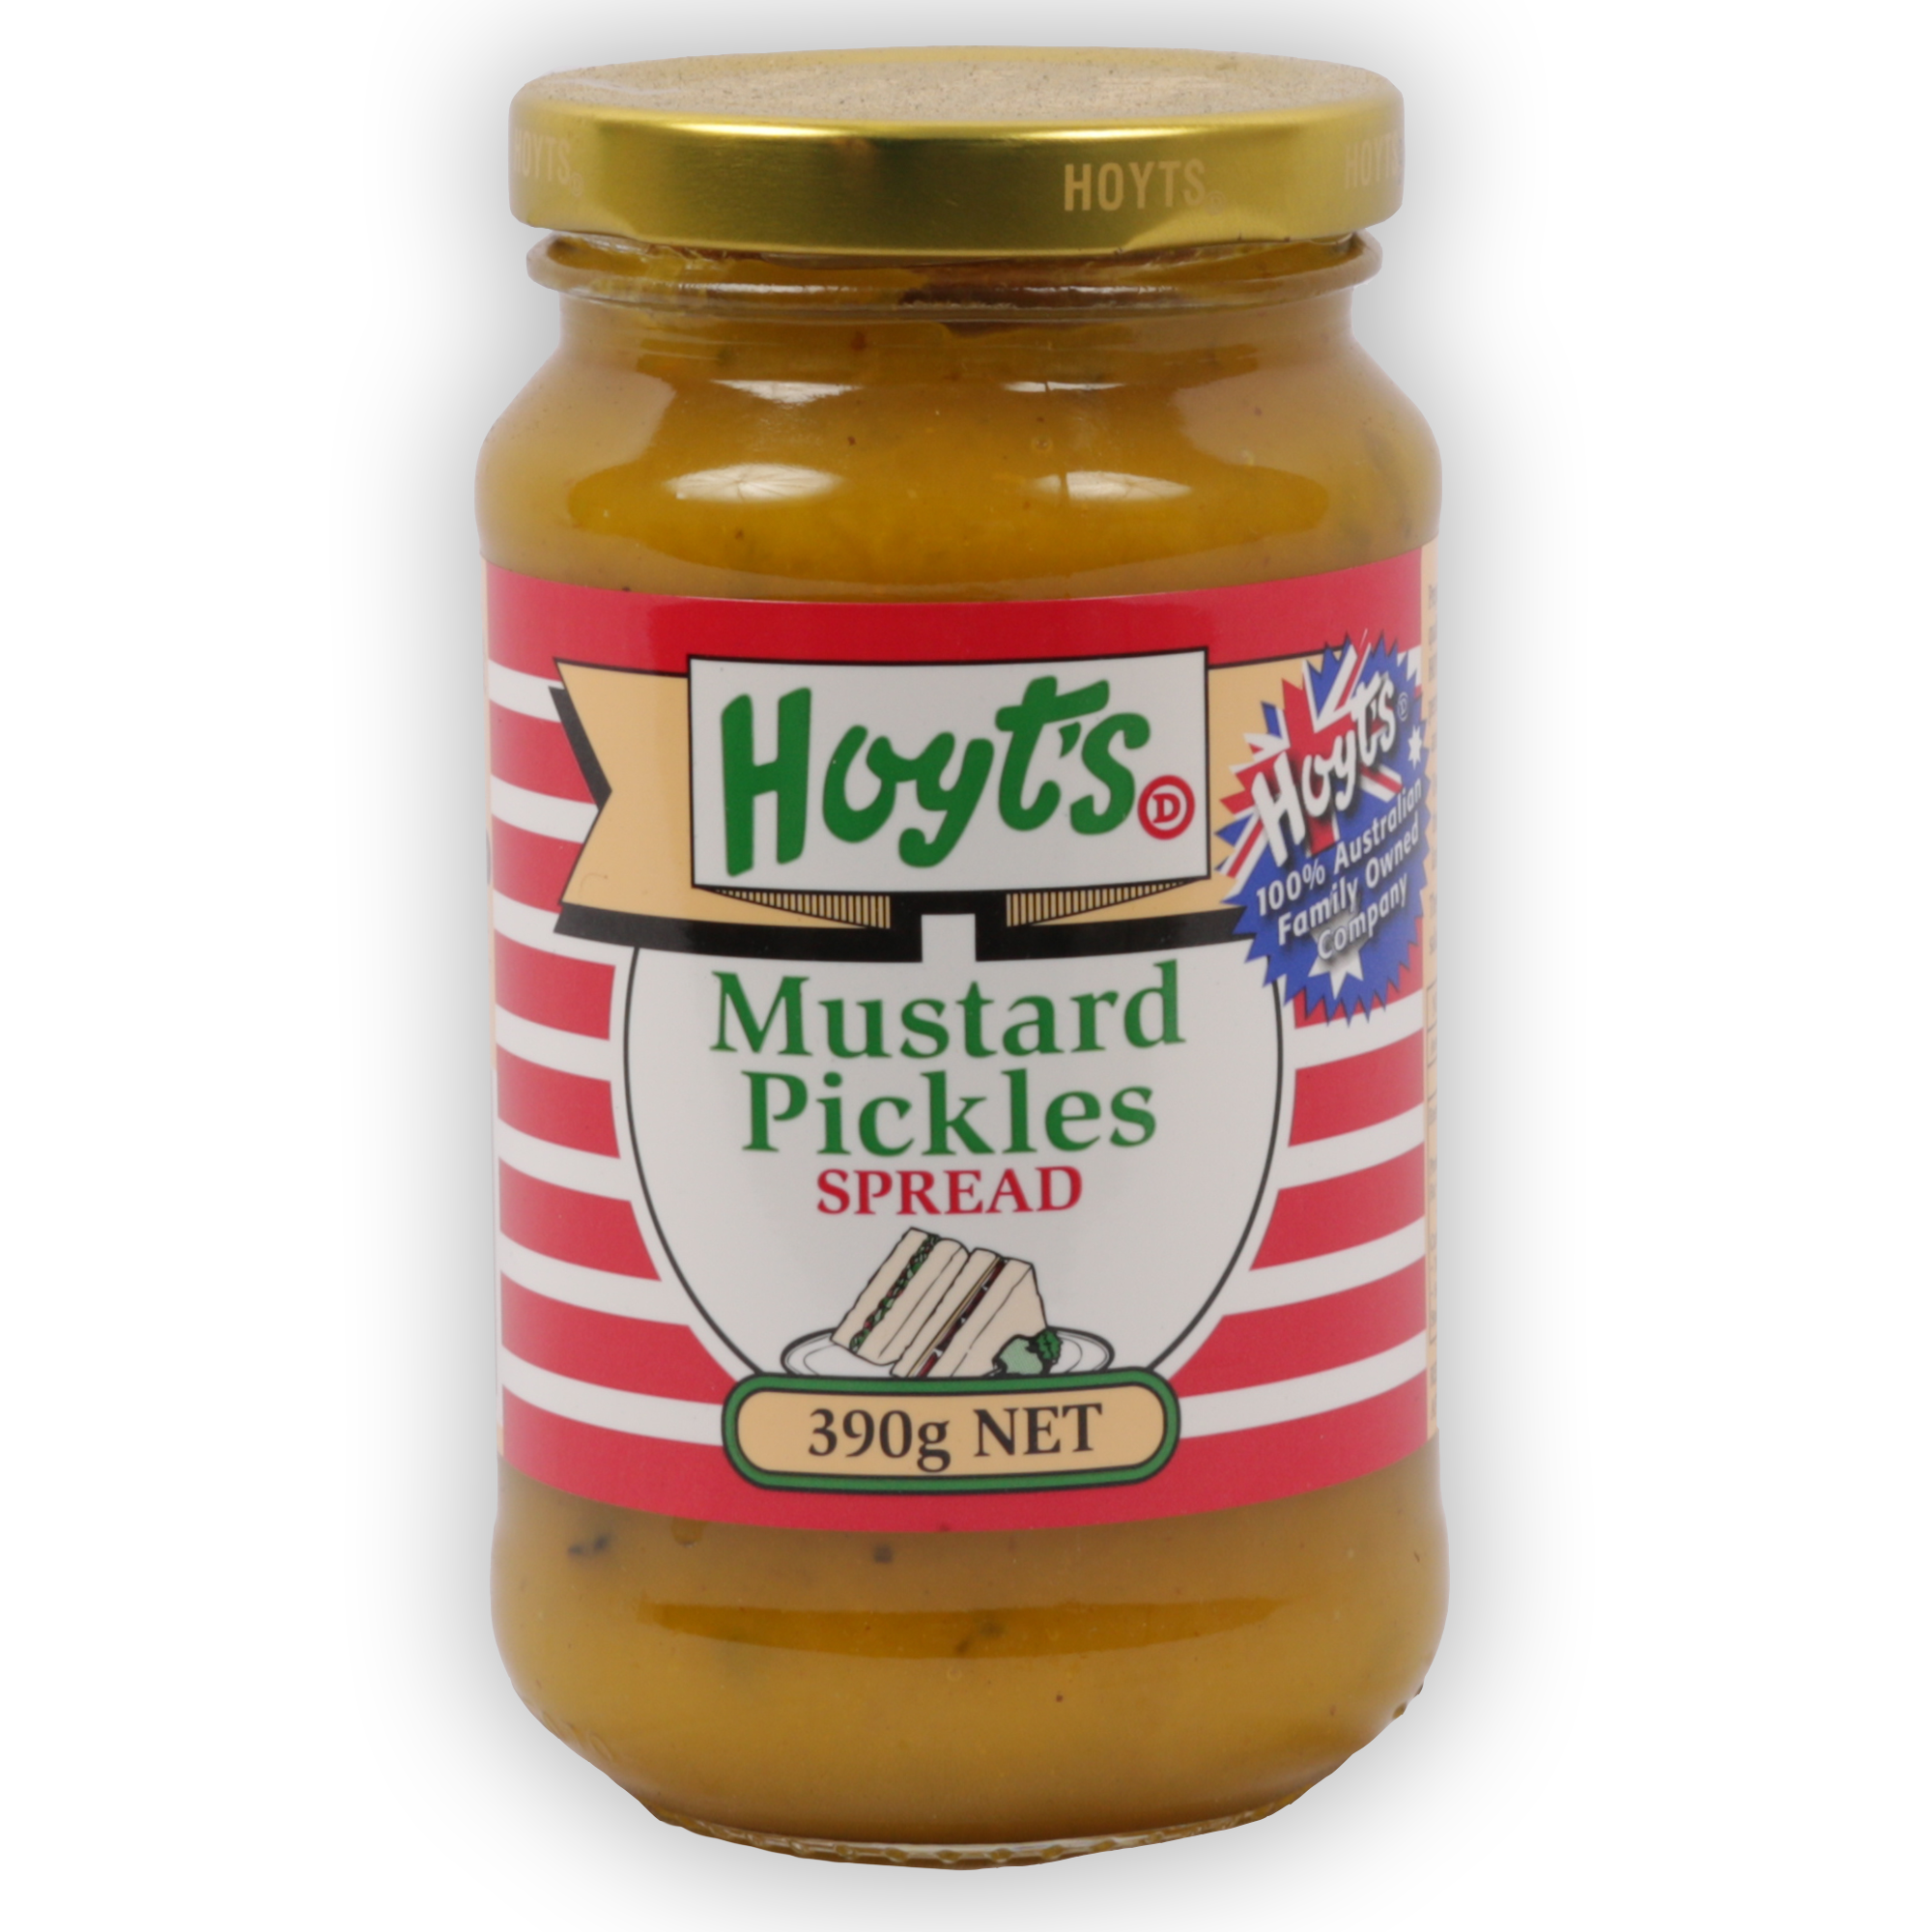 Mustard Pickles 390g - 9300725000349